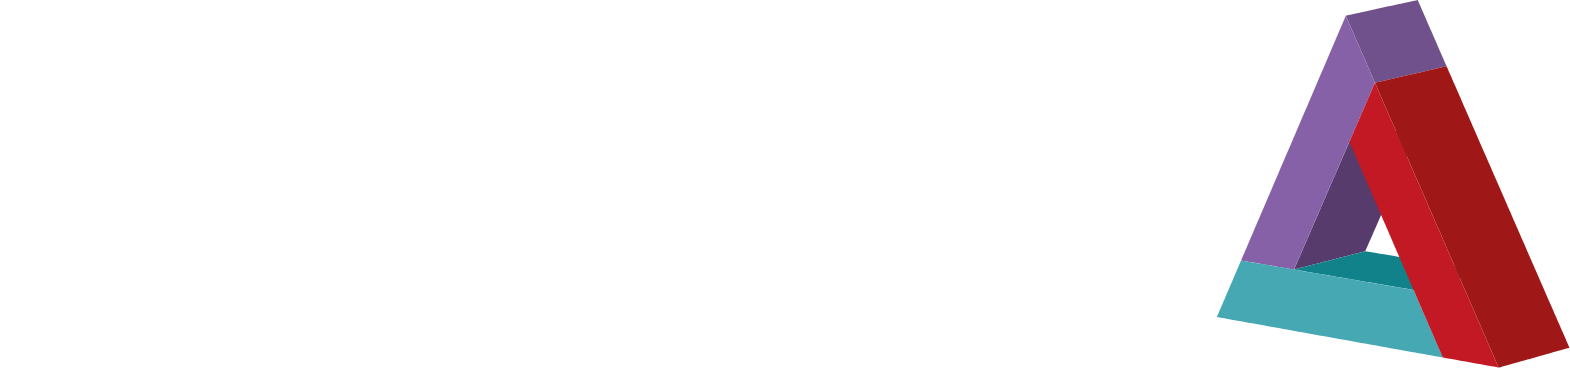 Helvetia Holding Logo groß für dunkle Hintergründe (transparentes PNG)